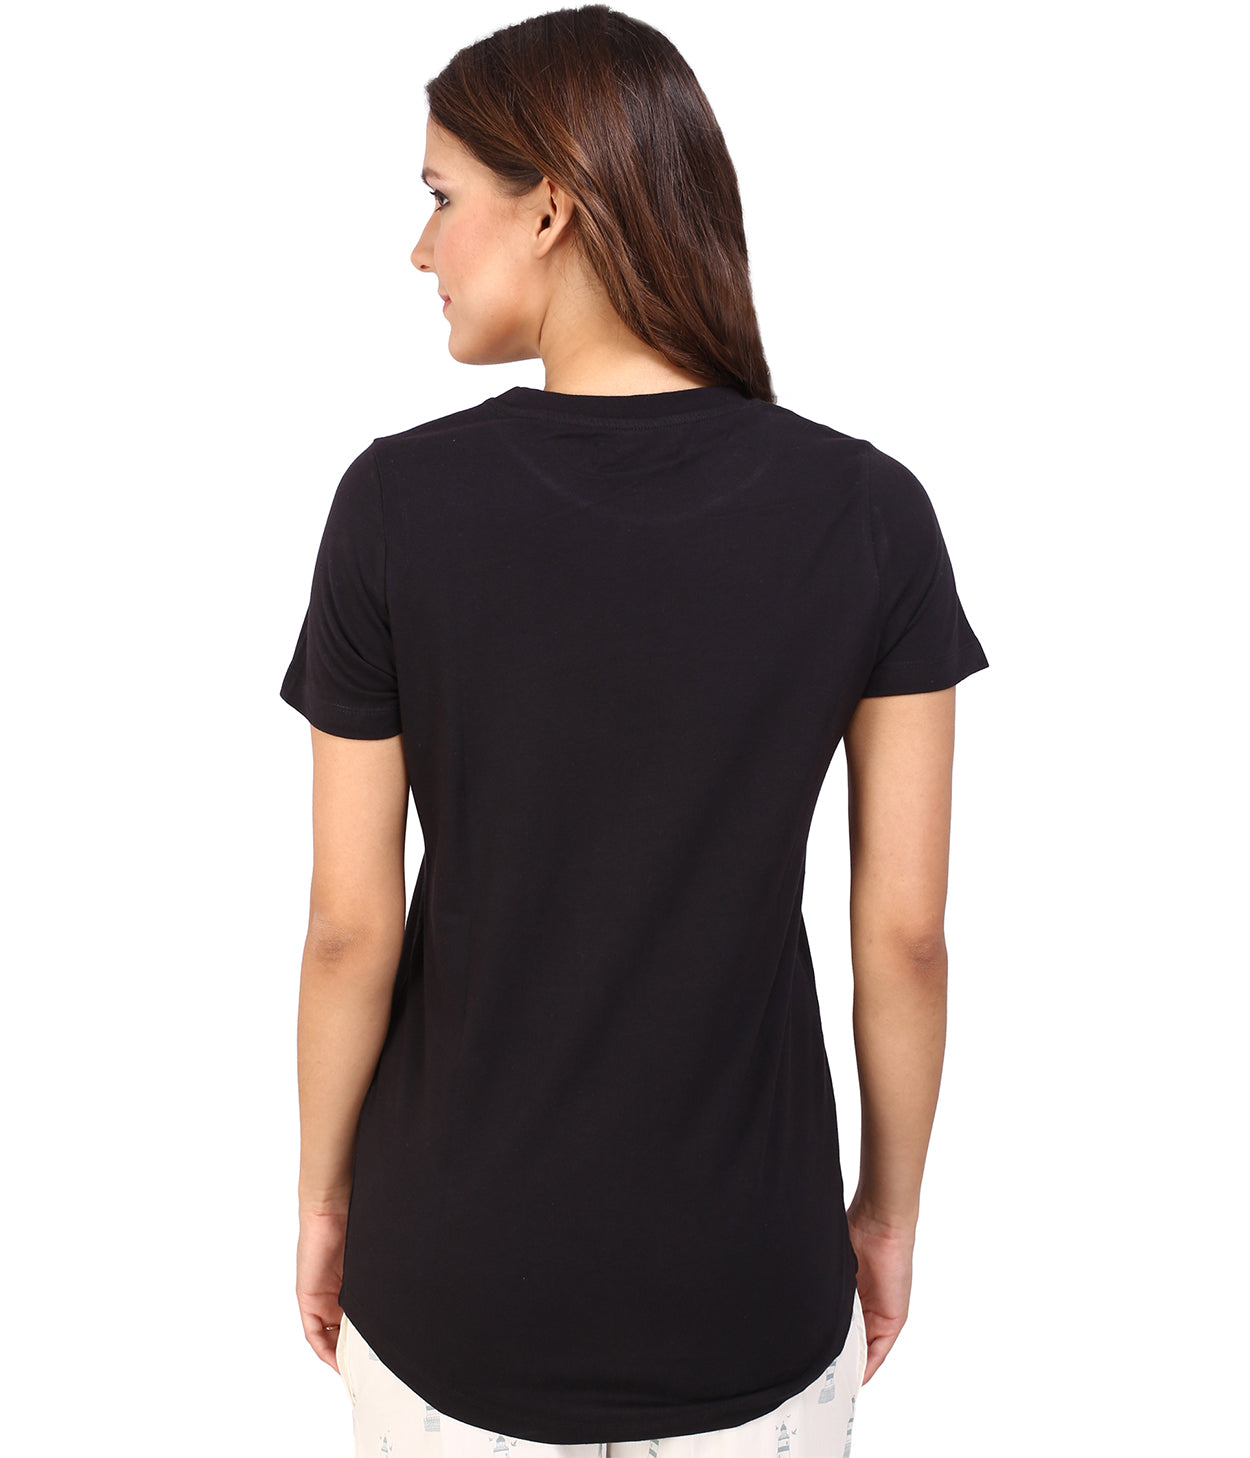 Black Solid Womens T-Shirt